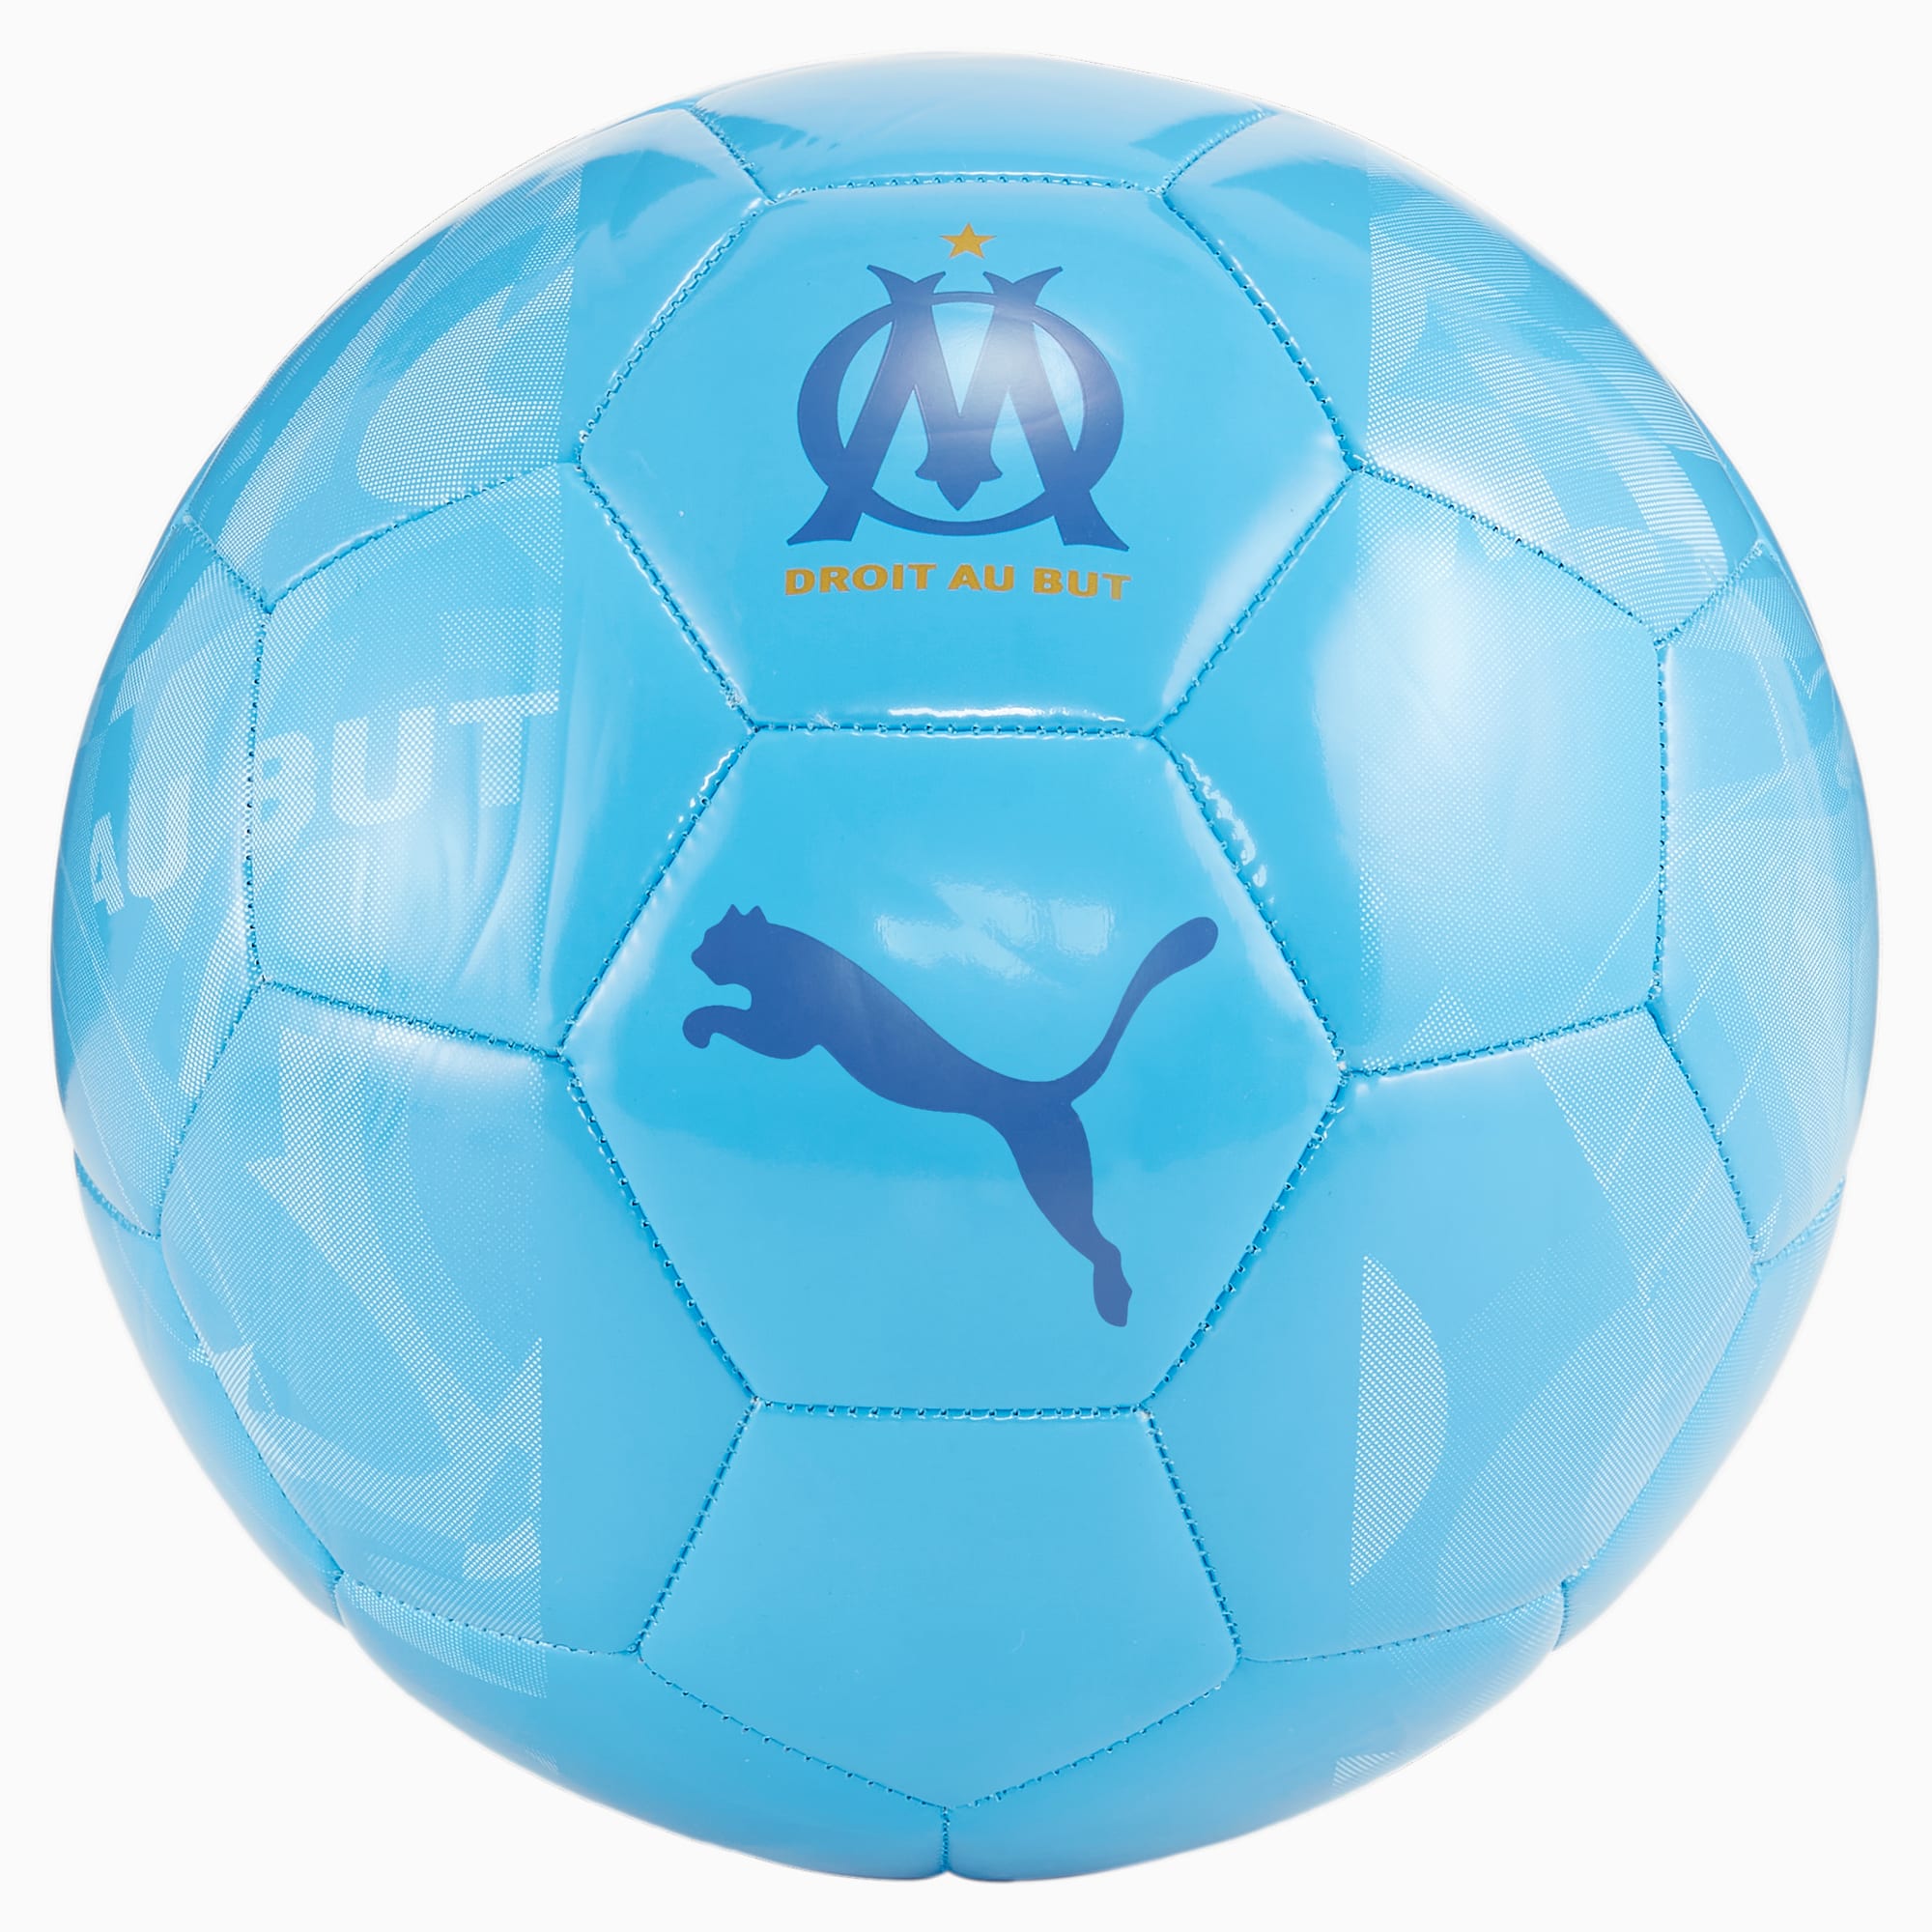 Olympique Marseille voetbal Puma Core - Maat 4 - blauw